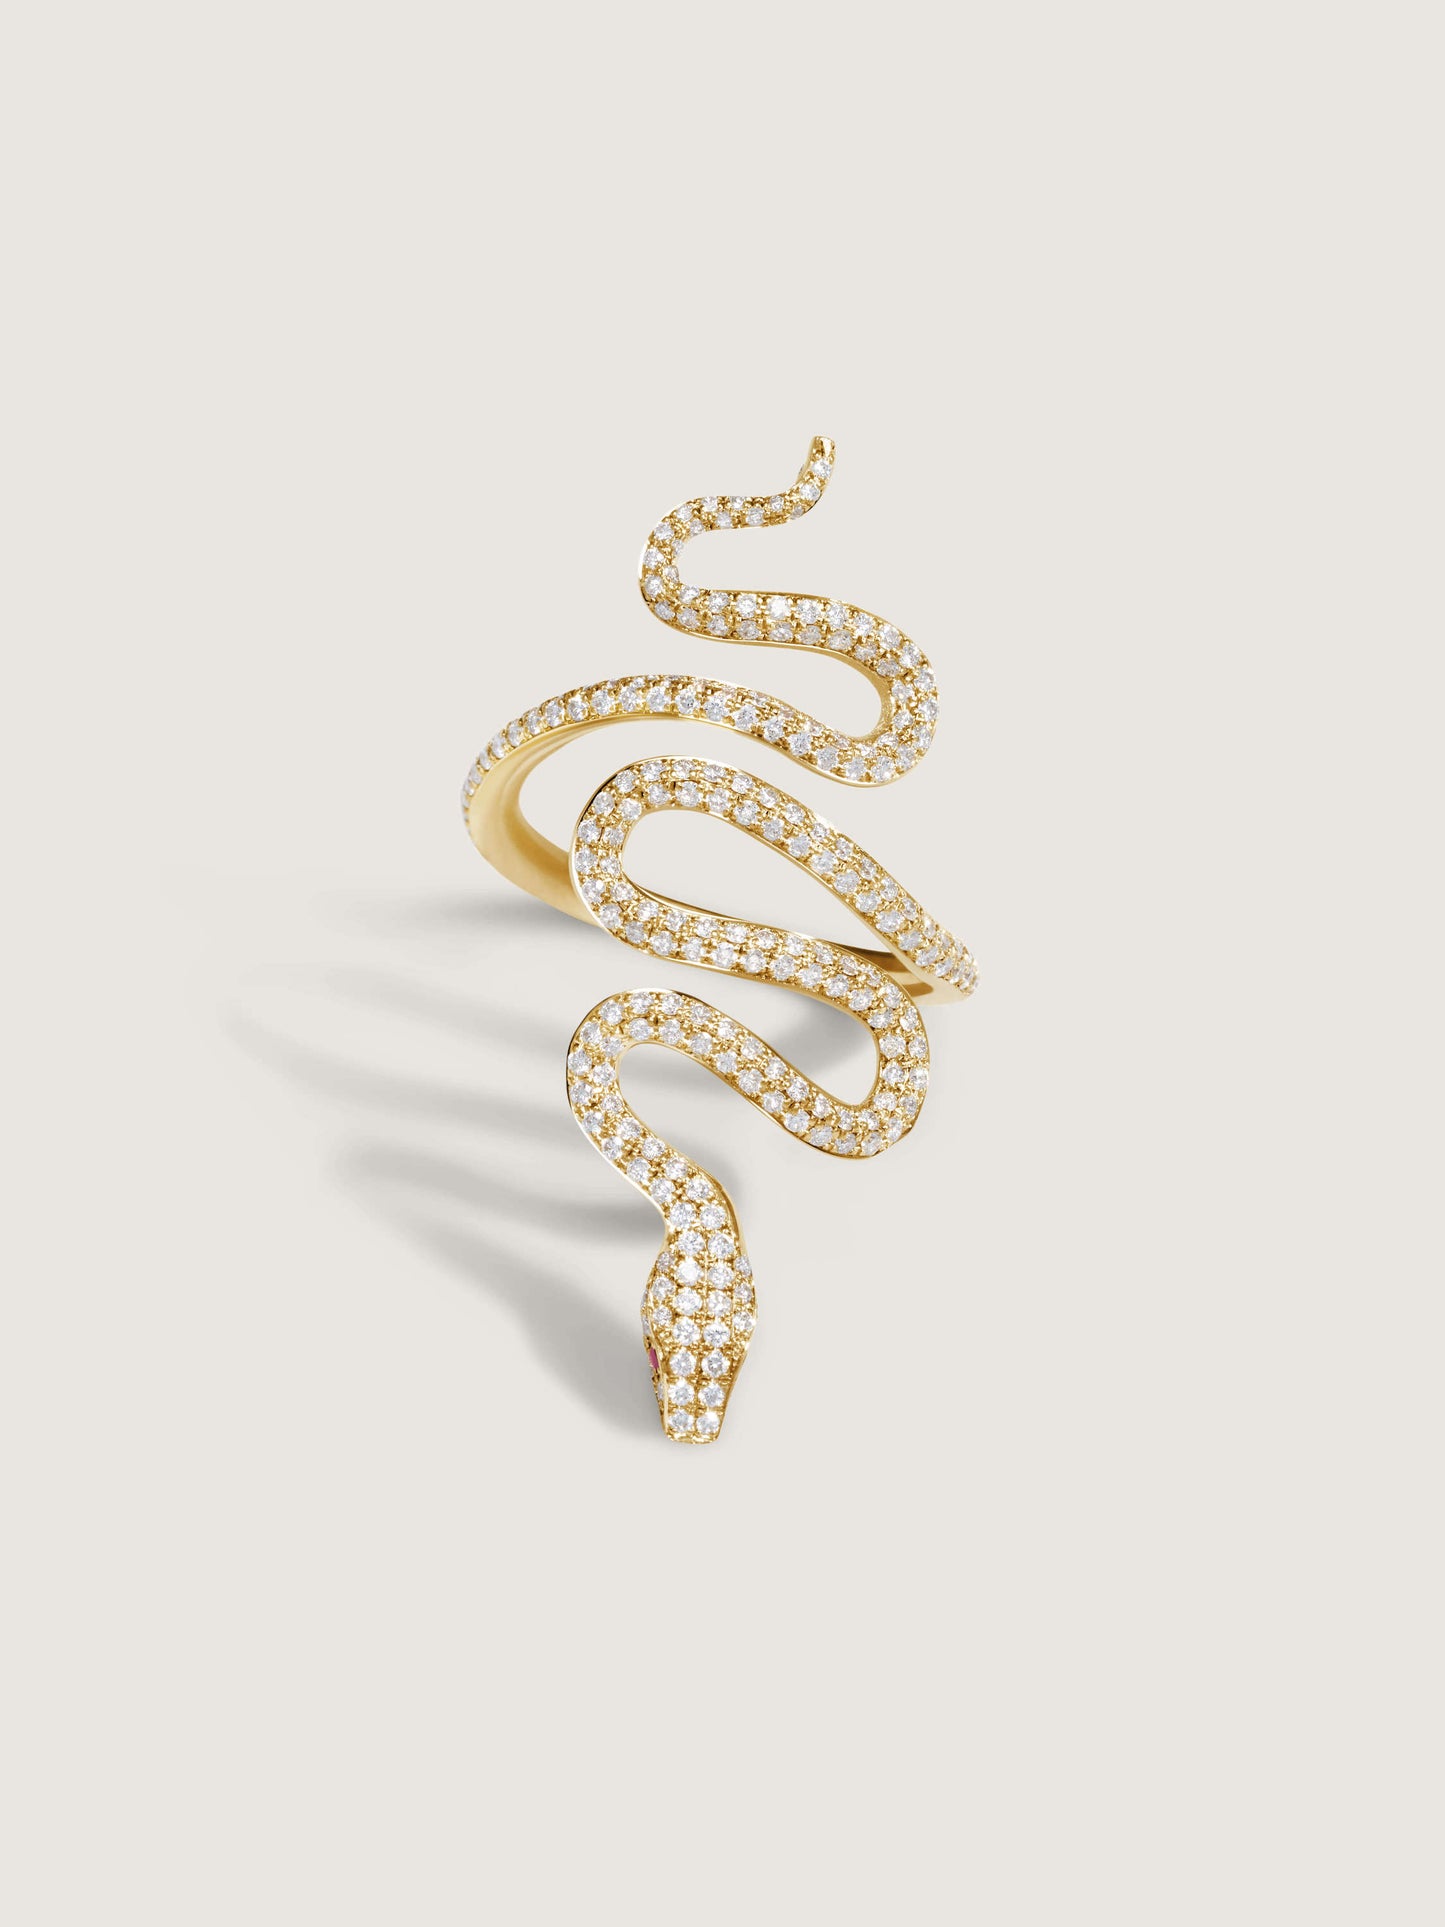 Doublemoss Vibora Snake Ring with 287 Brilliant Cut Diamonds.